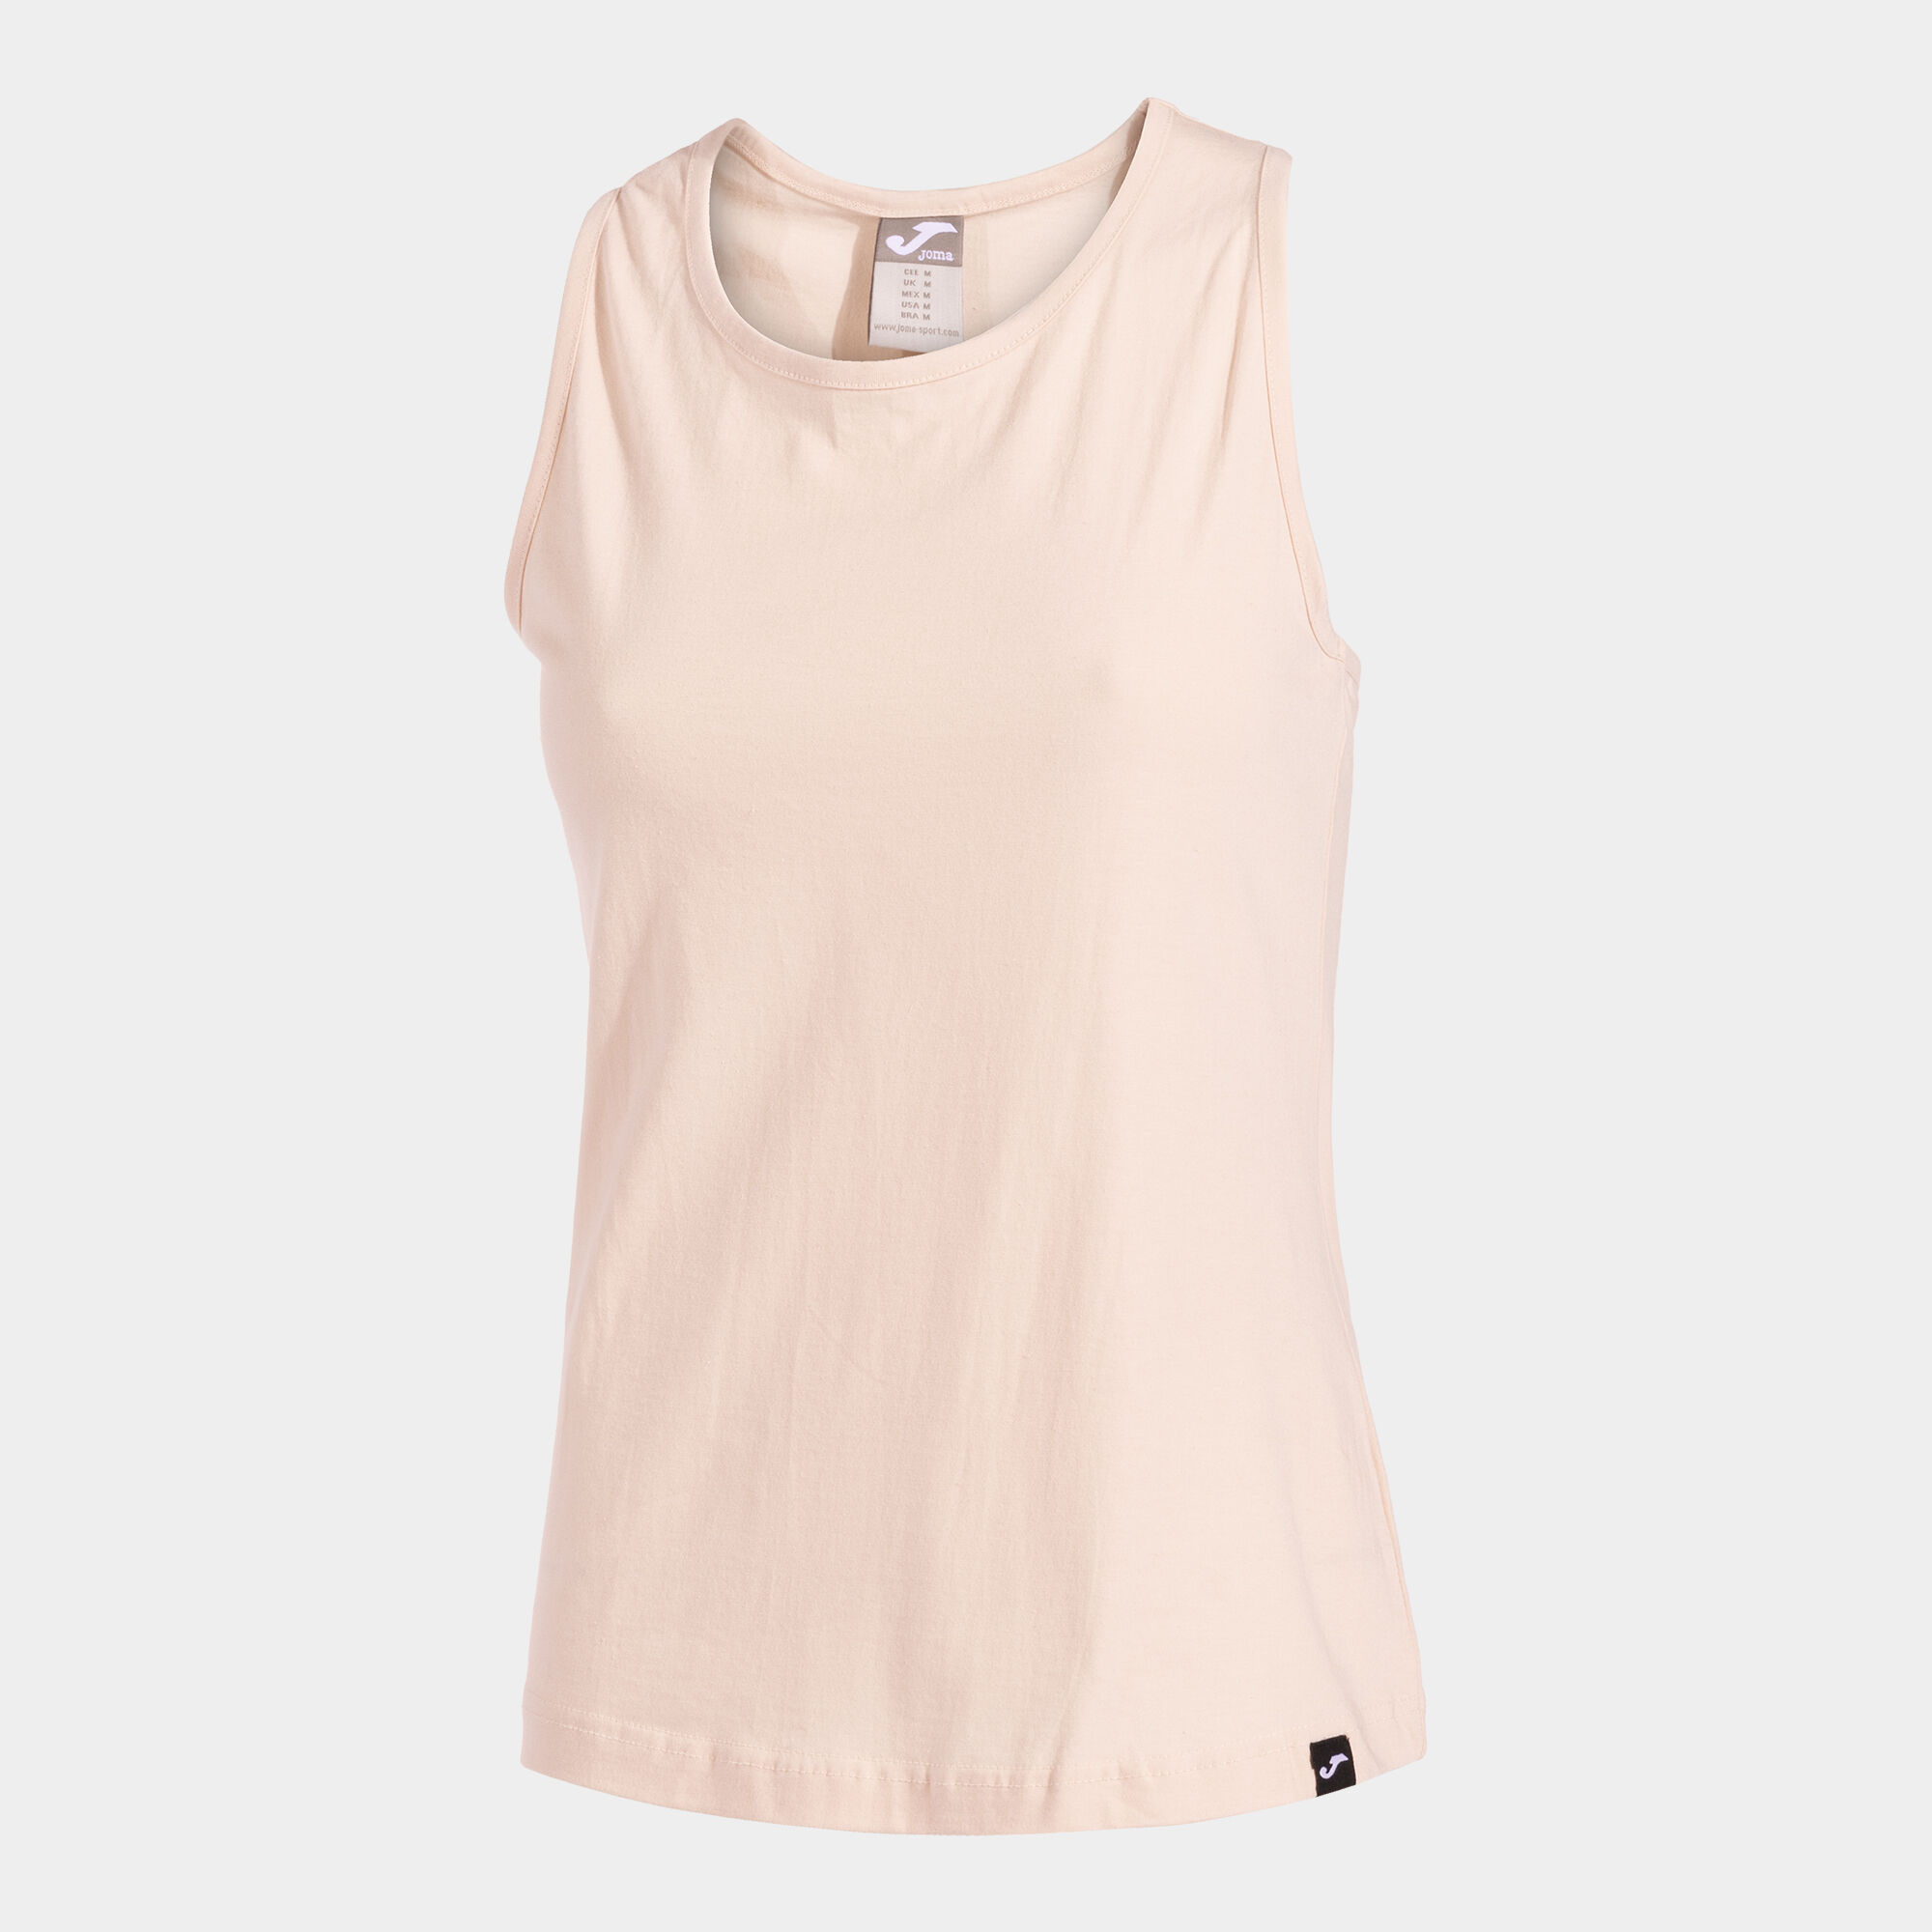 Camiseta tirantes mujer Oasis rosa